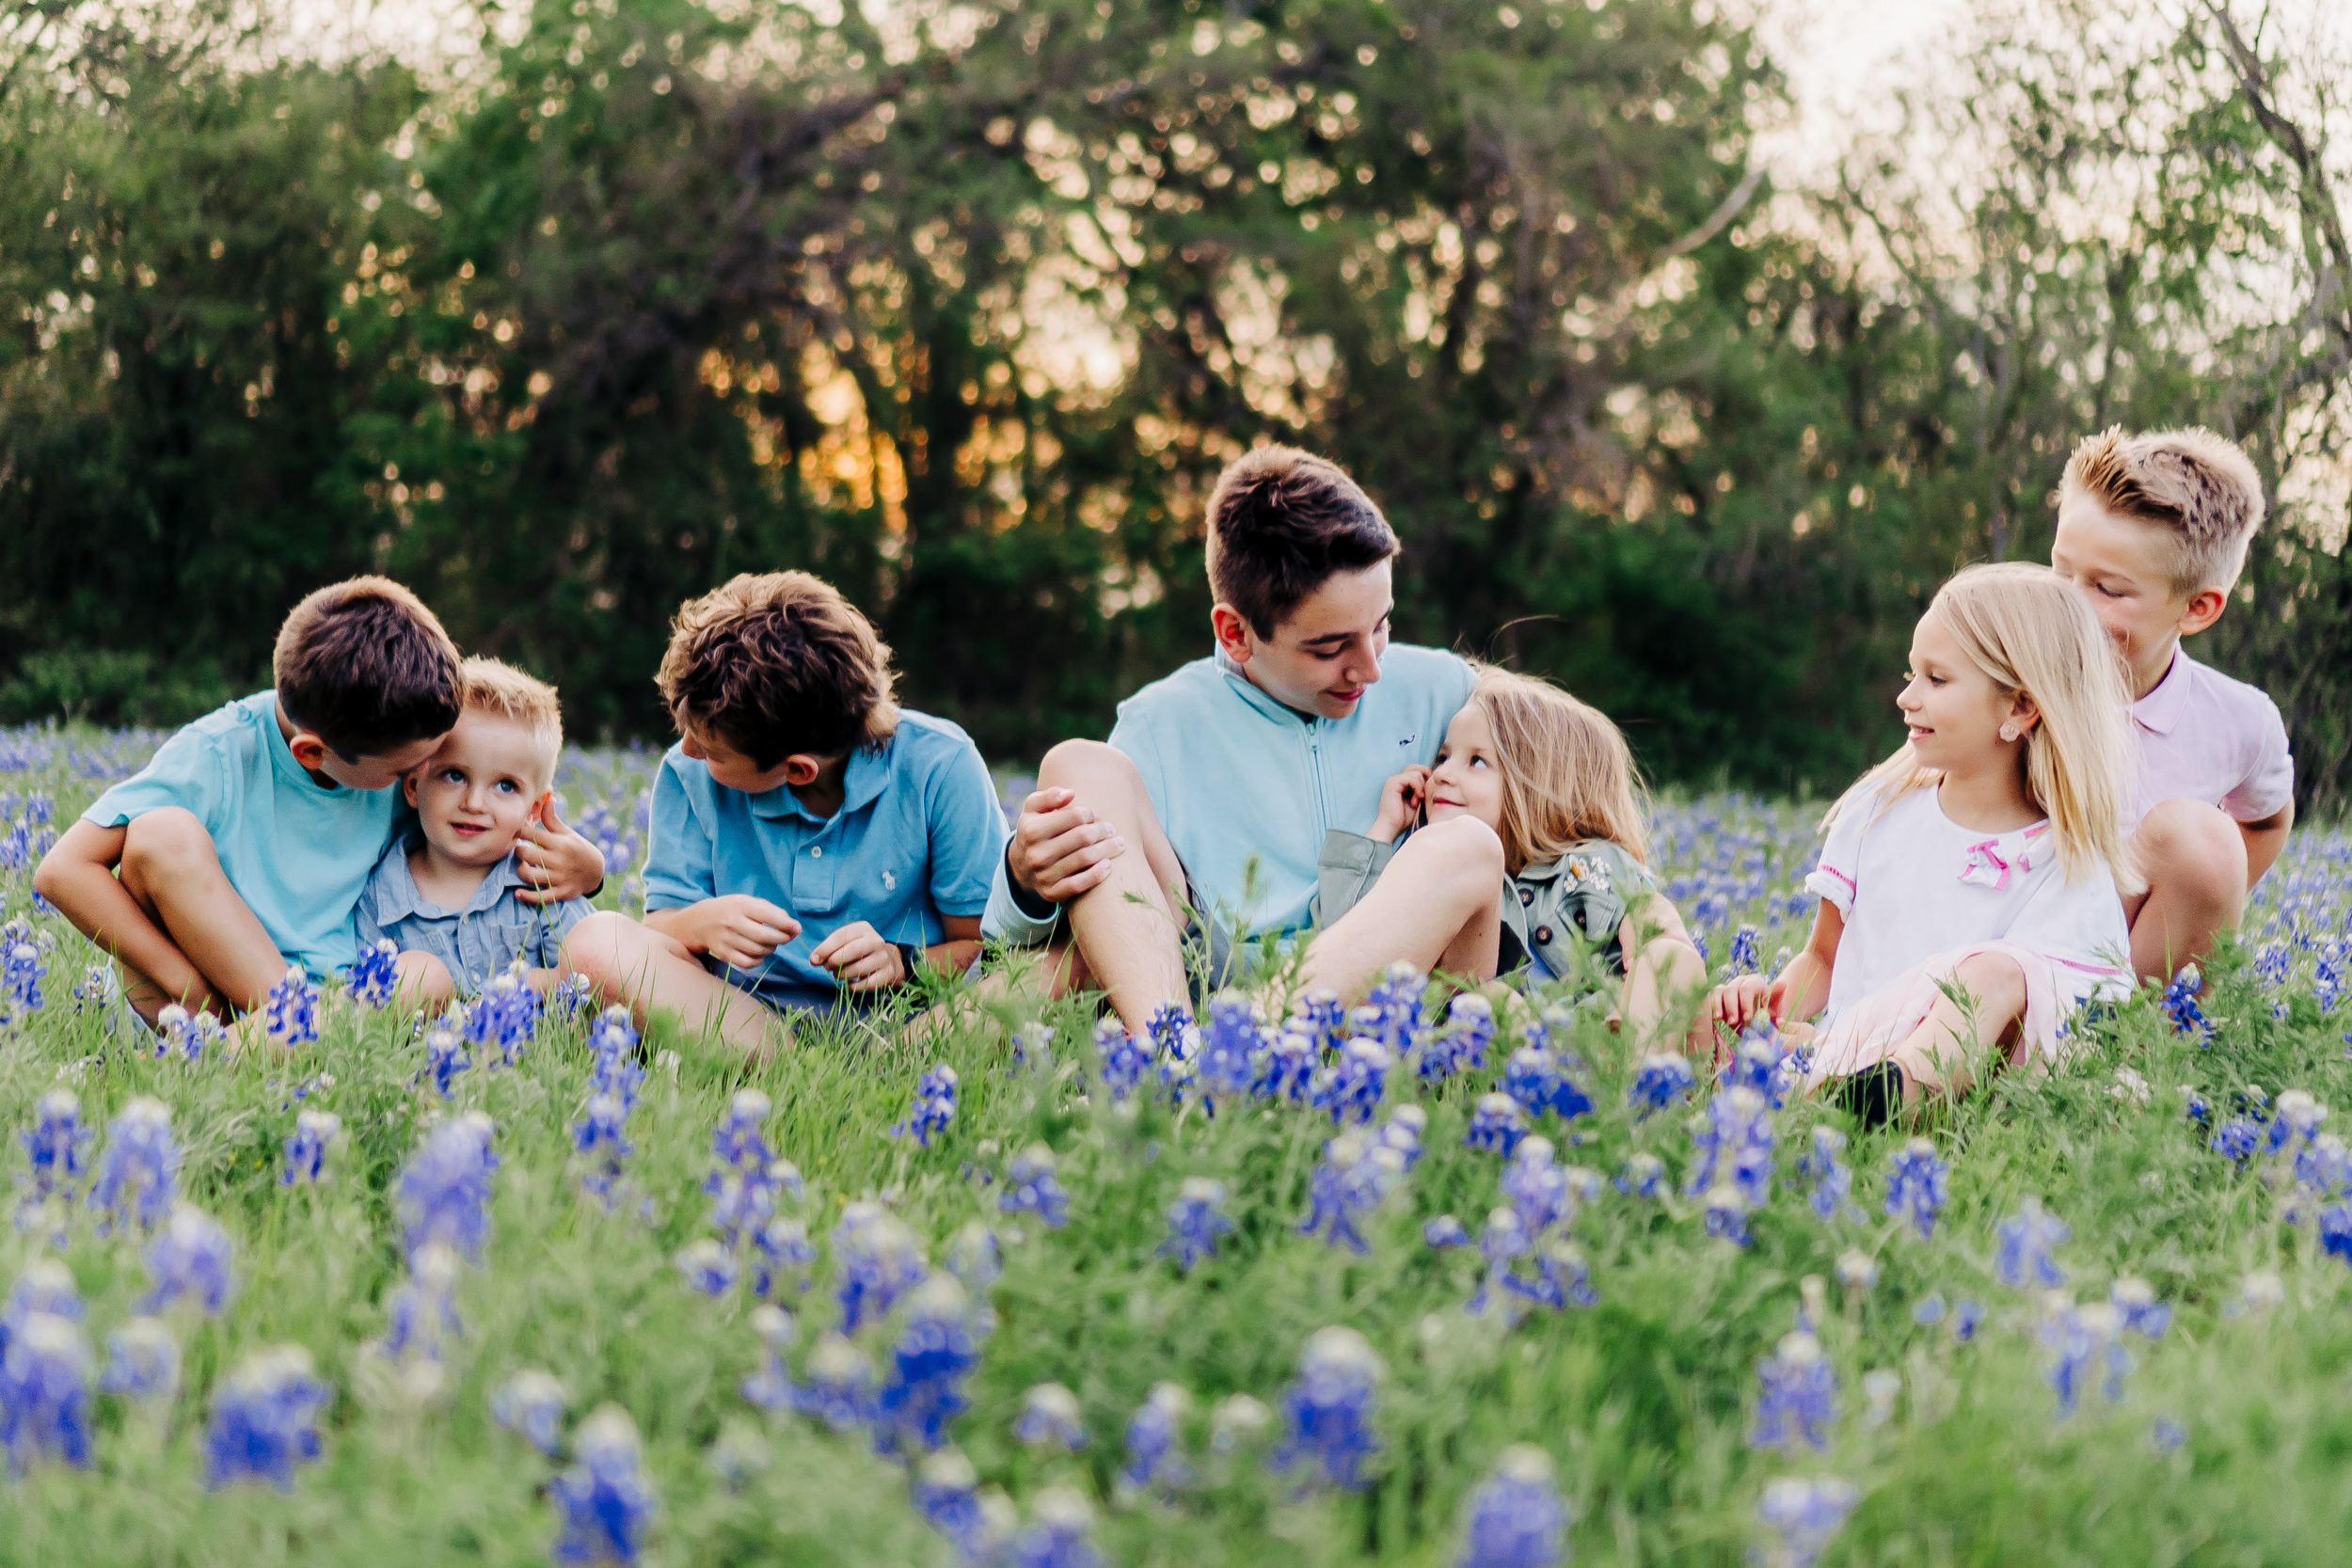 Large family bluebonnet photos | Plano, Texas Family Photographer | via brittnierenee.com